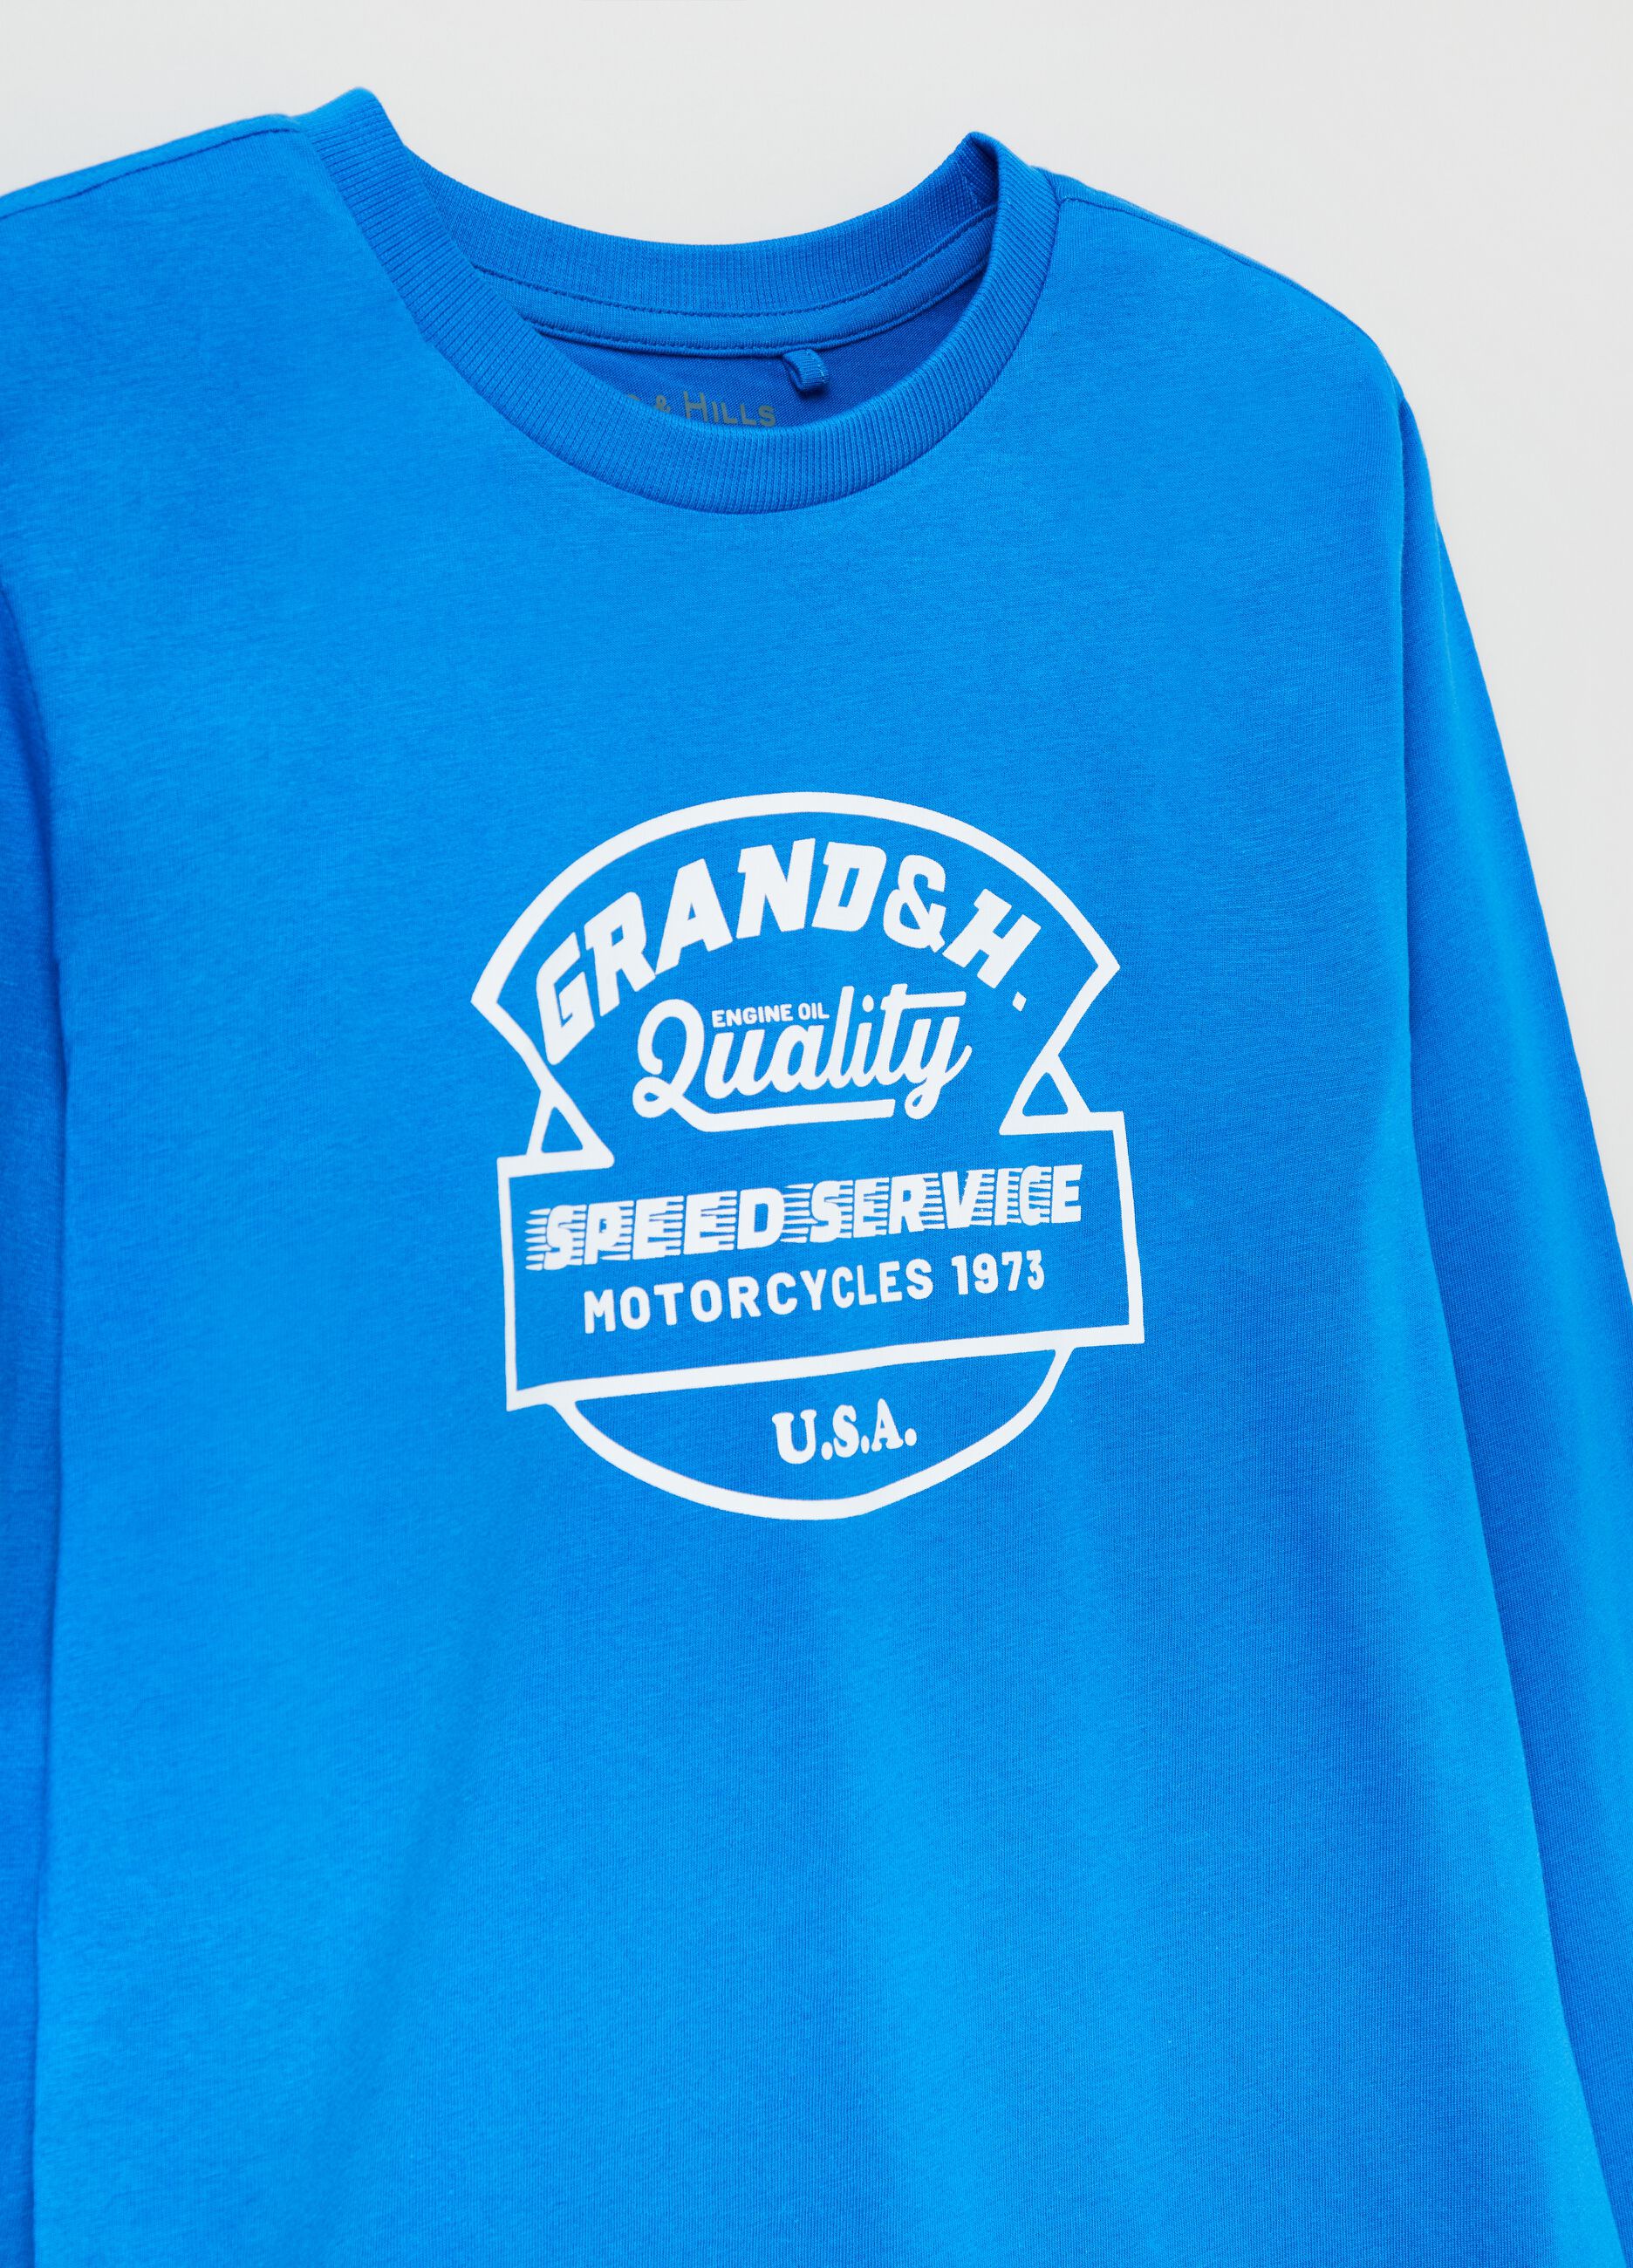 T-shirt maniche lunghe con stampa Grand&Hills